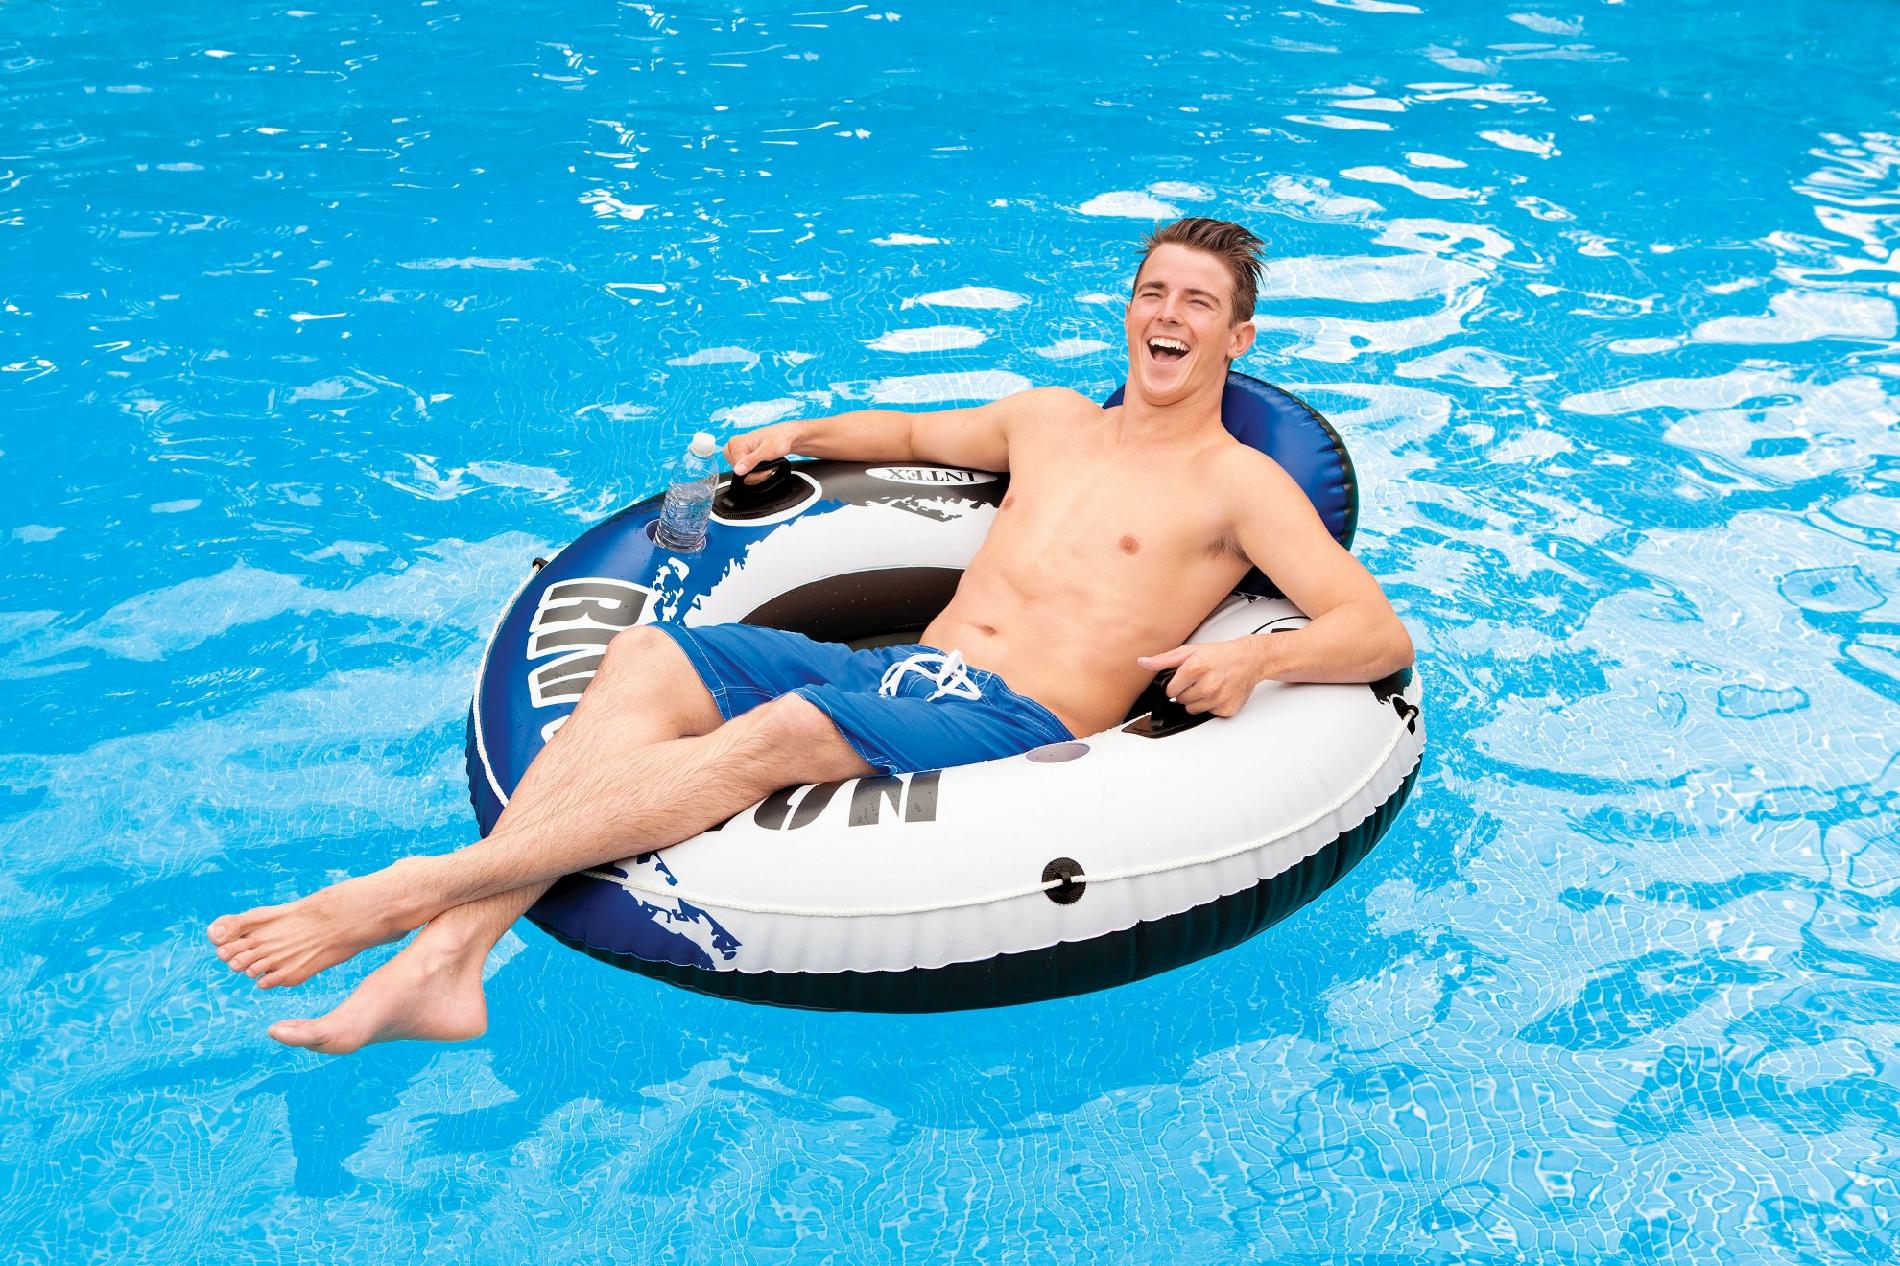 Intex River Run Inflatable Lounger—$9.99!